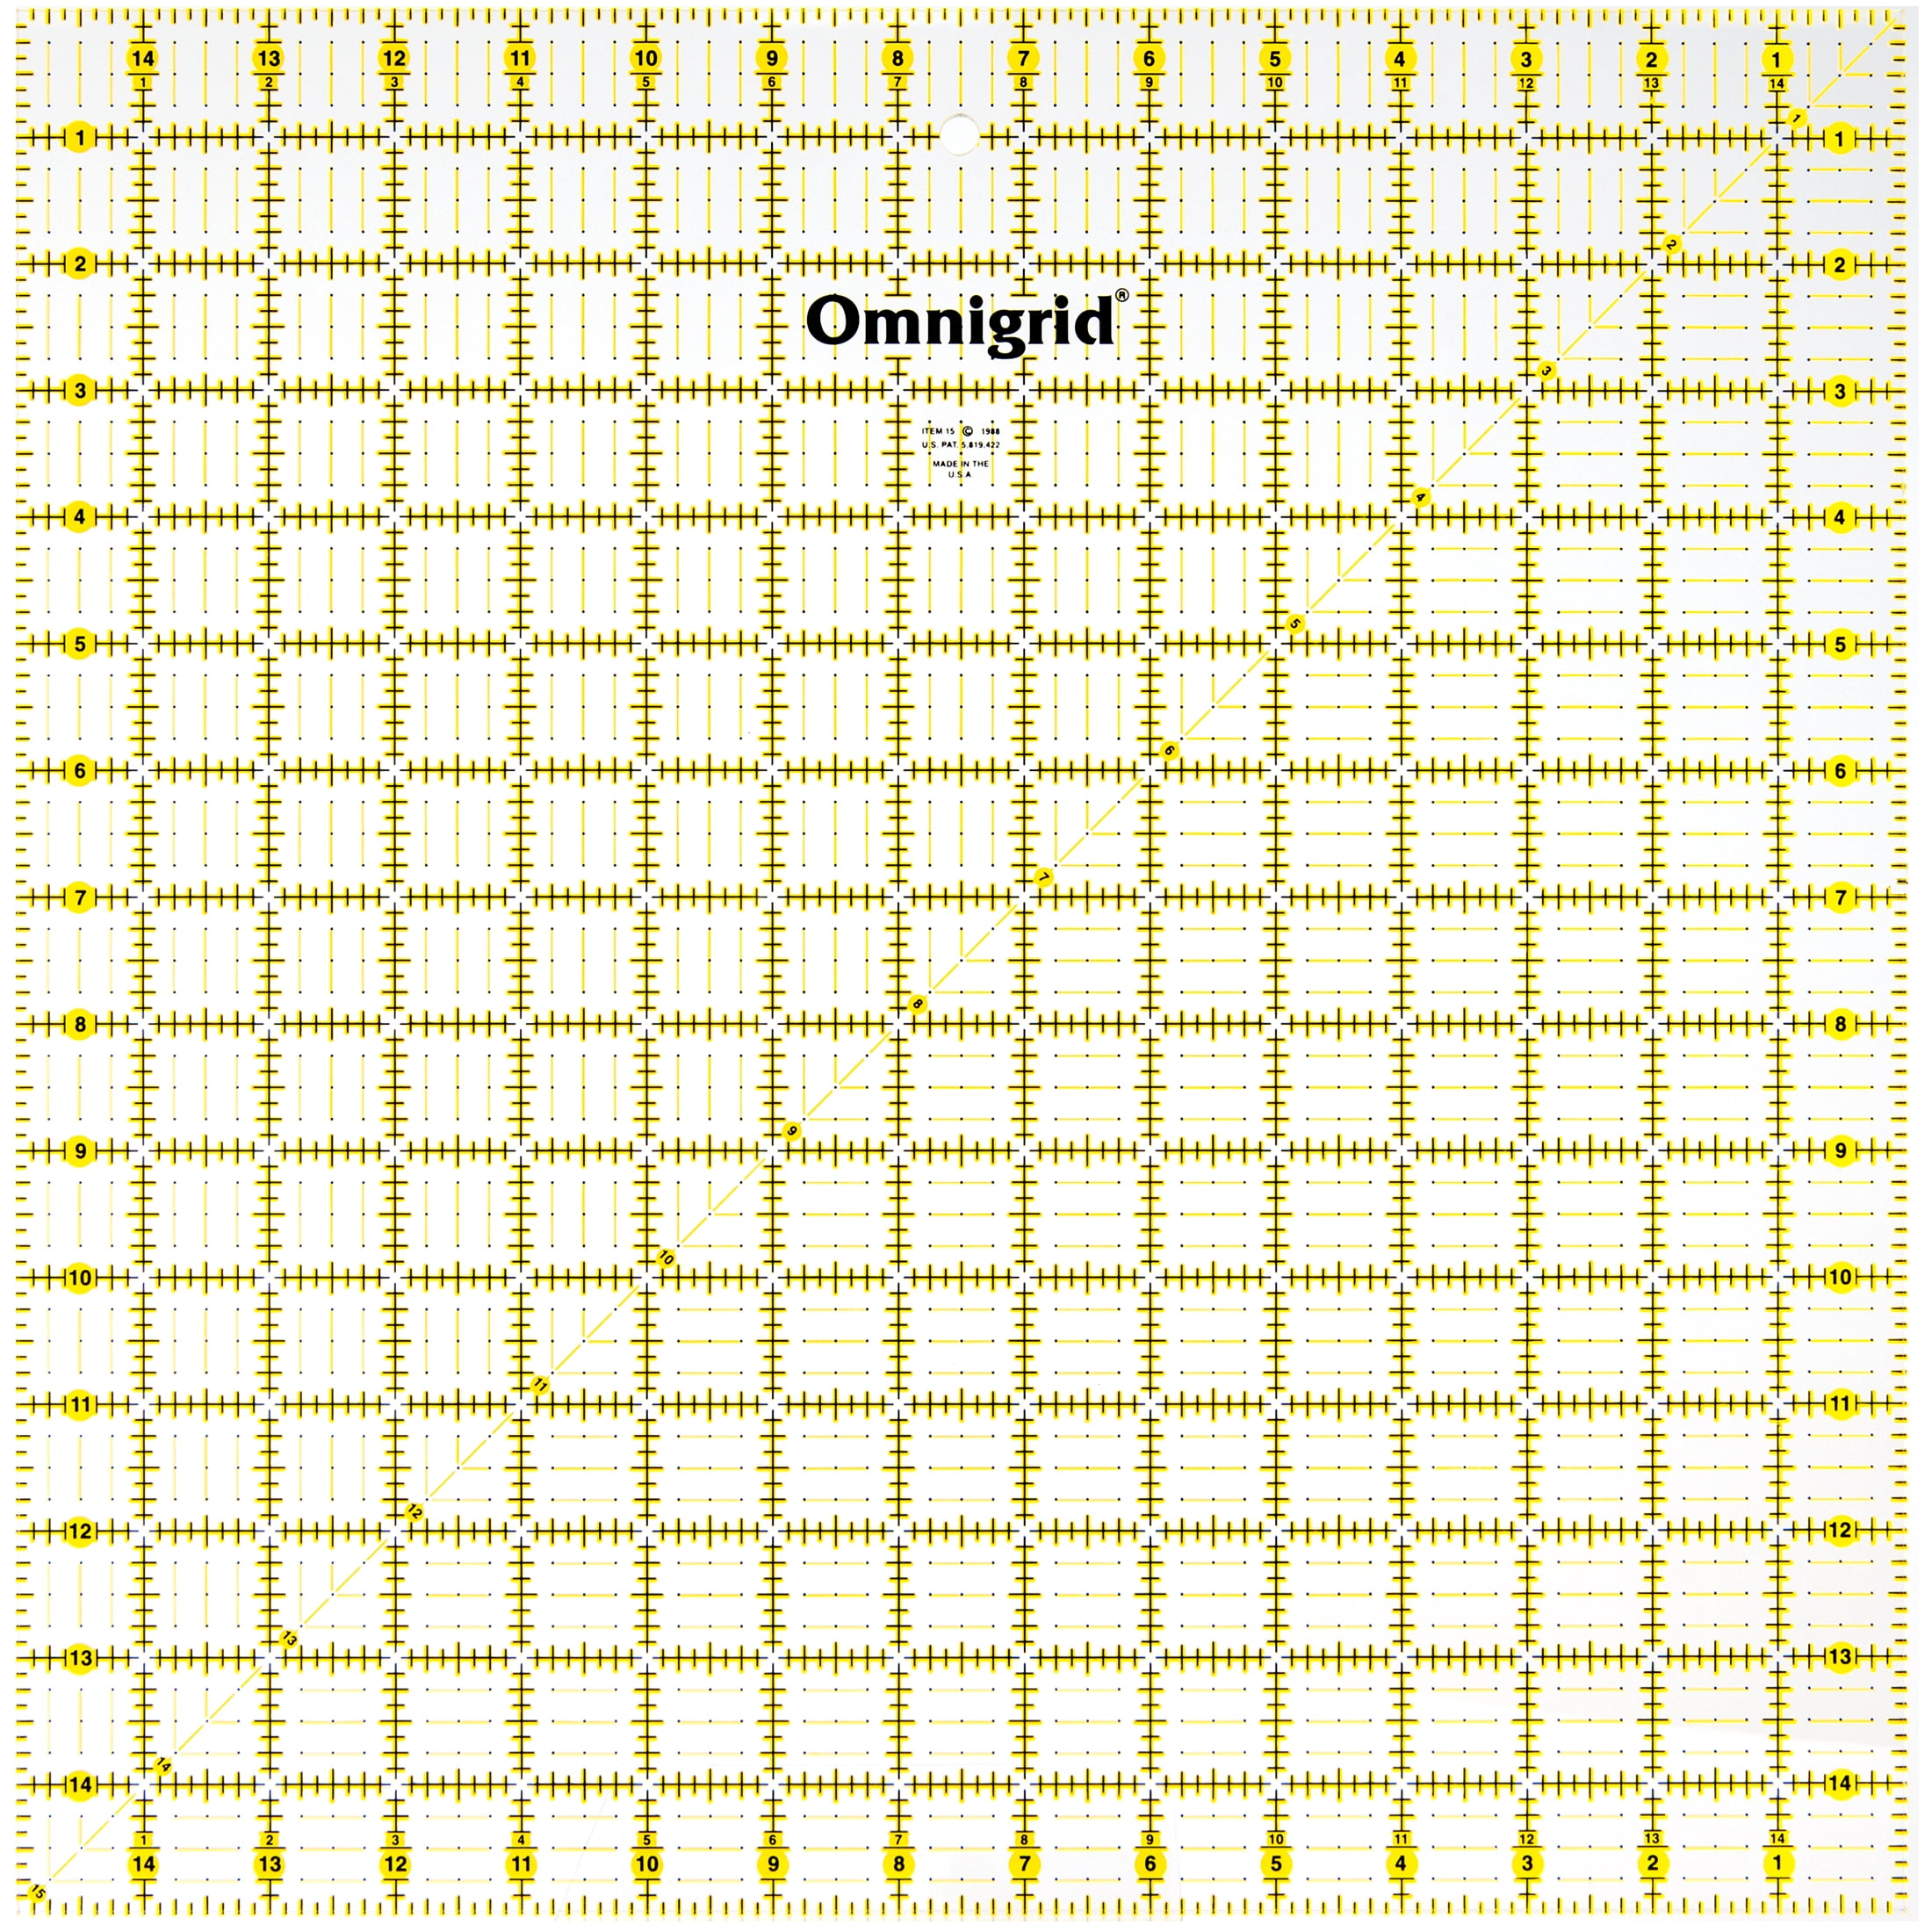 eQuilter Omnigrip Non-Slip Neon Grid - Quilting Ruler - 6 x 24